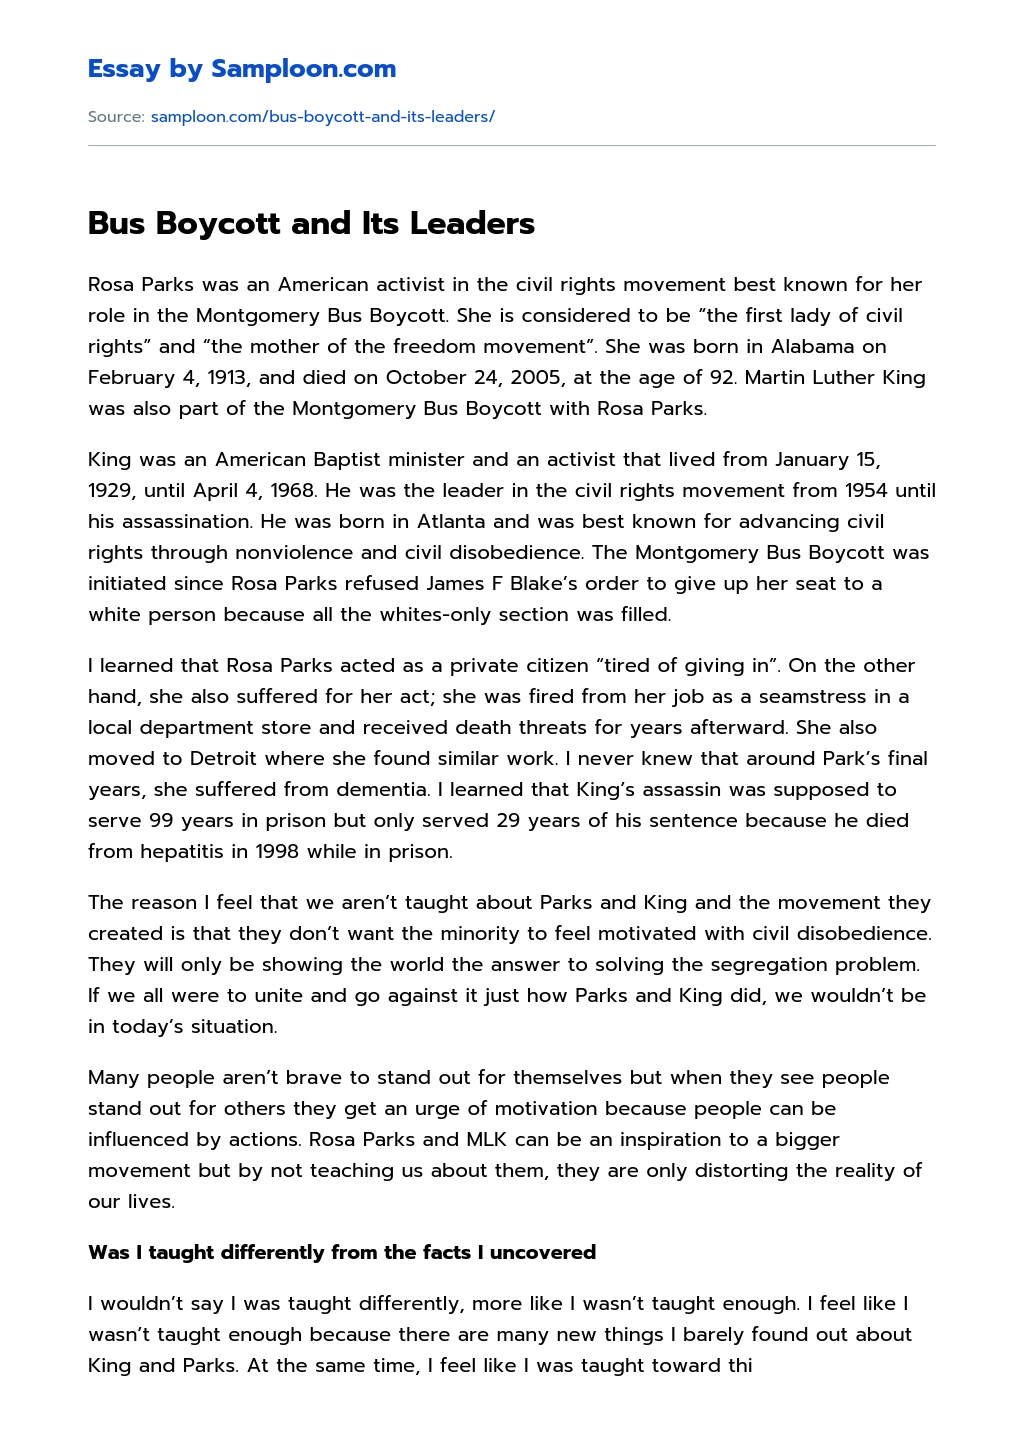 Bus Boycott and Its Leaders essay